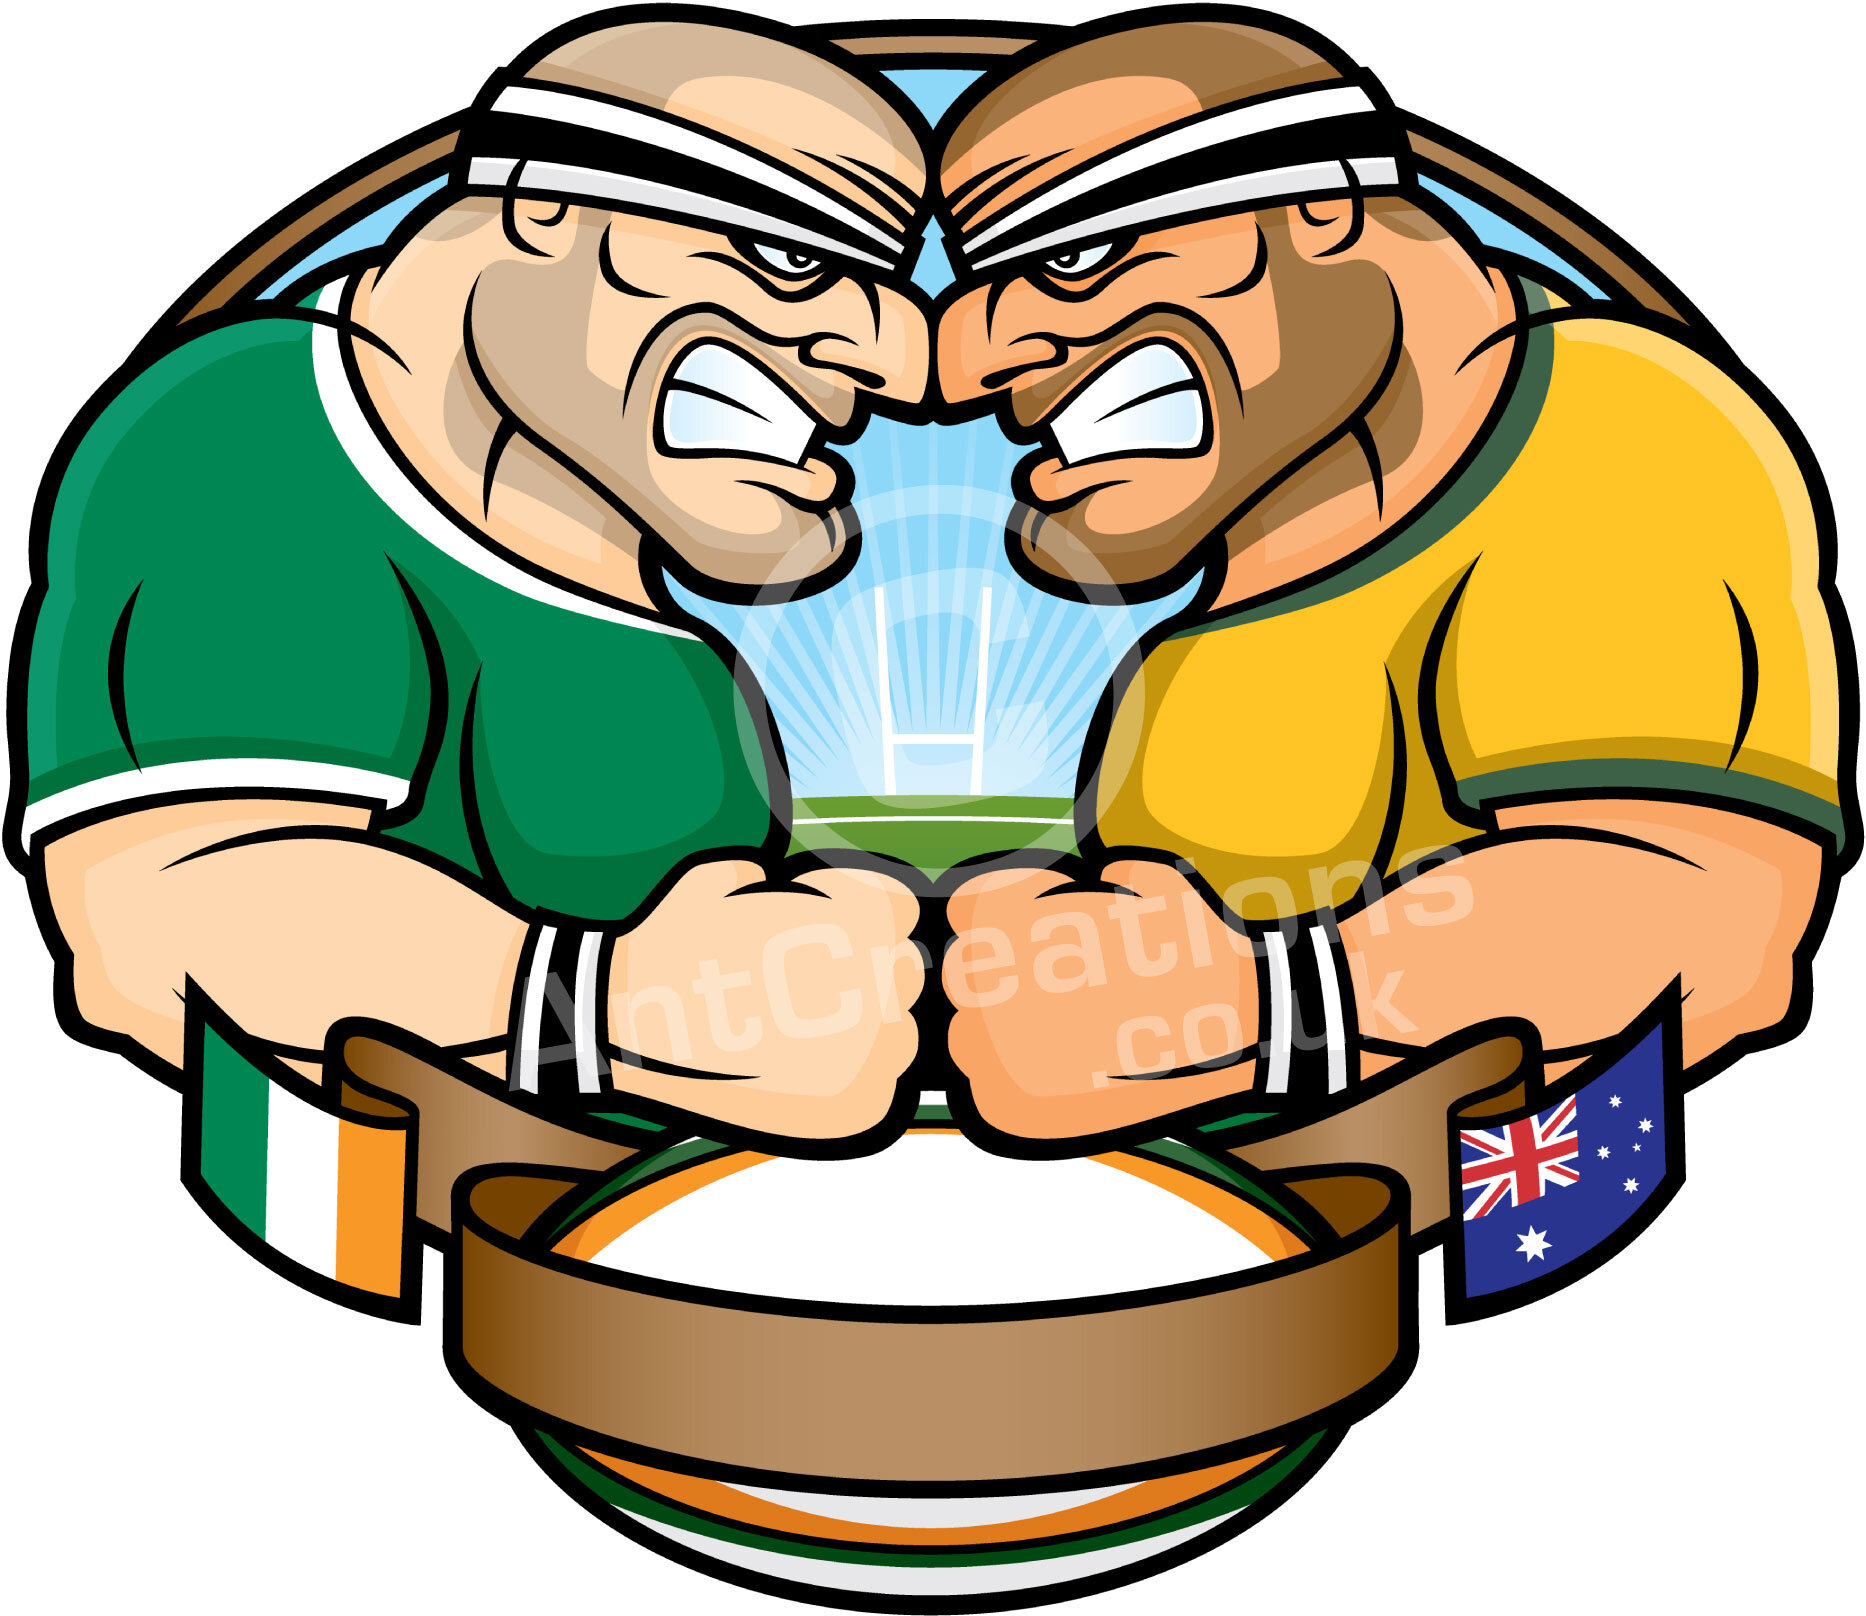 Rugby-Emblem-Ireland-vs-Australia.jpg